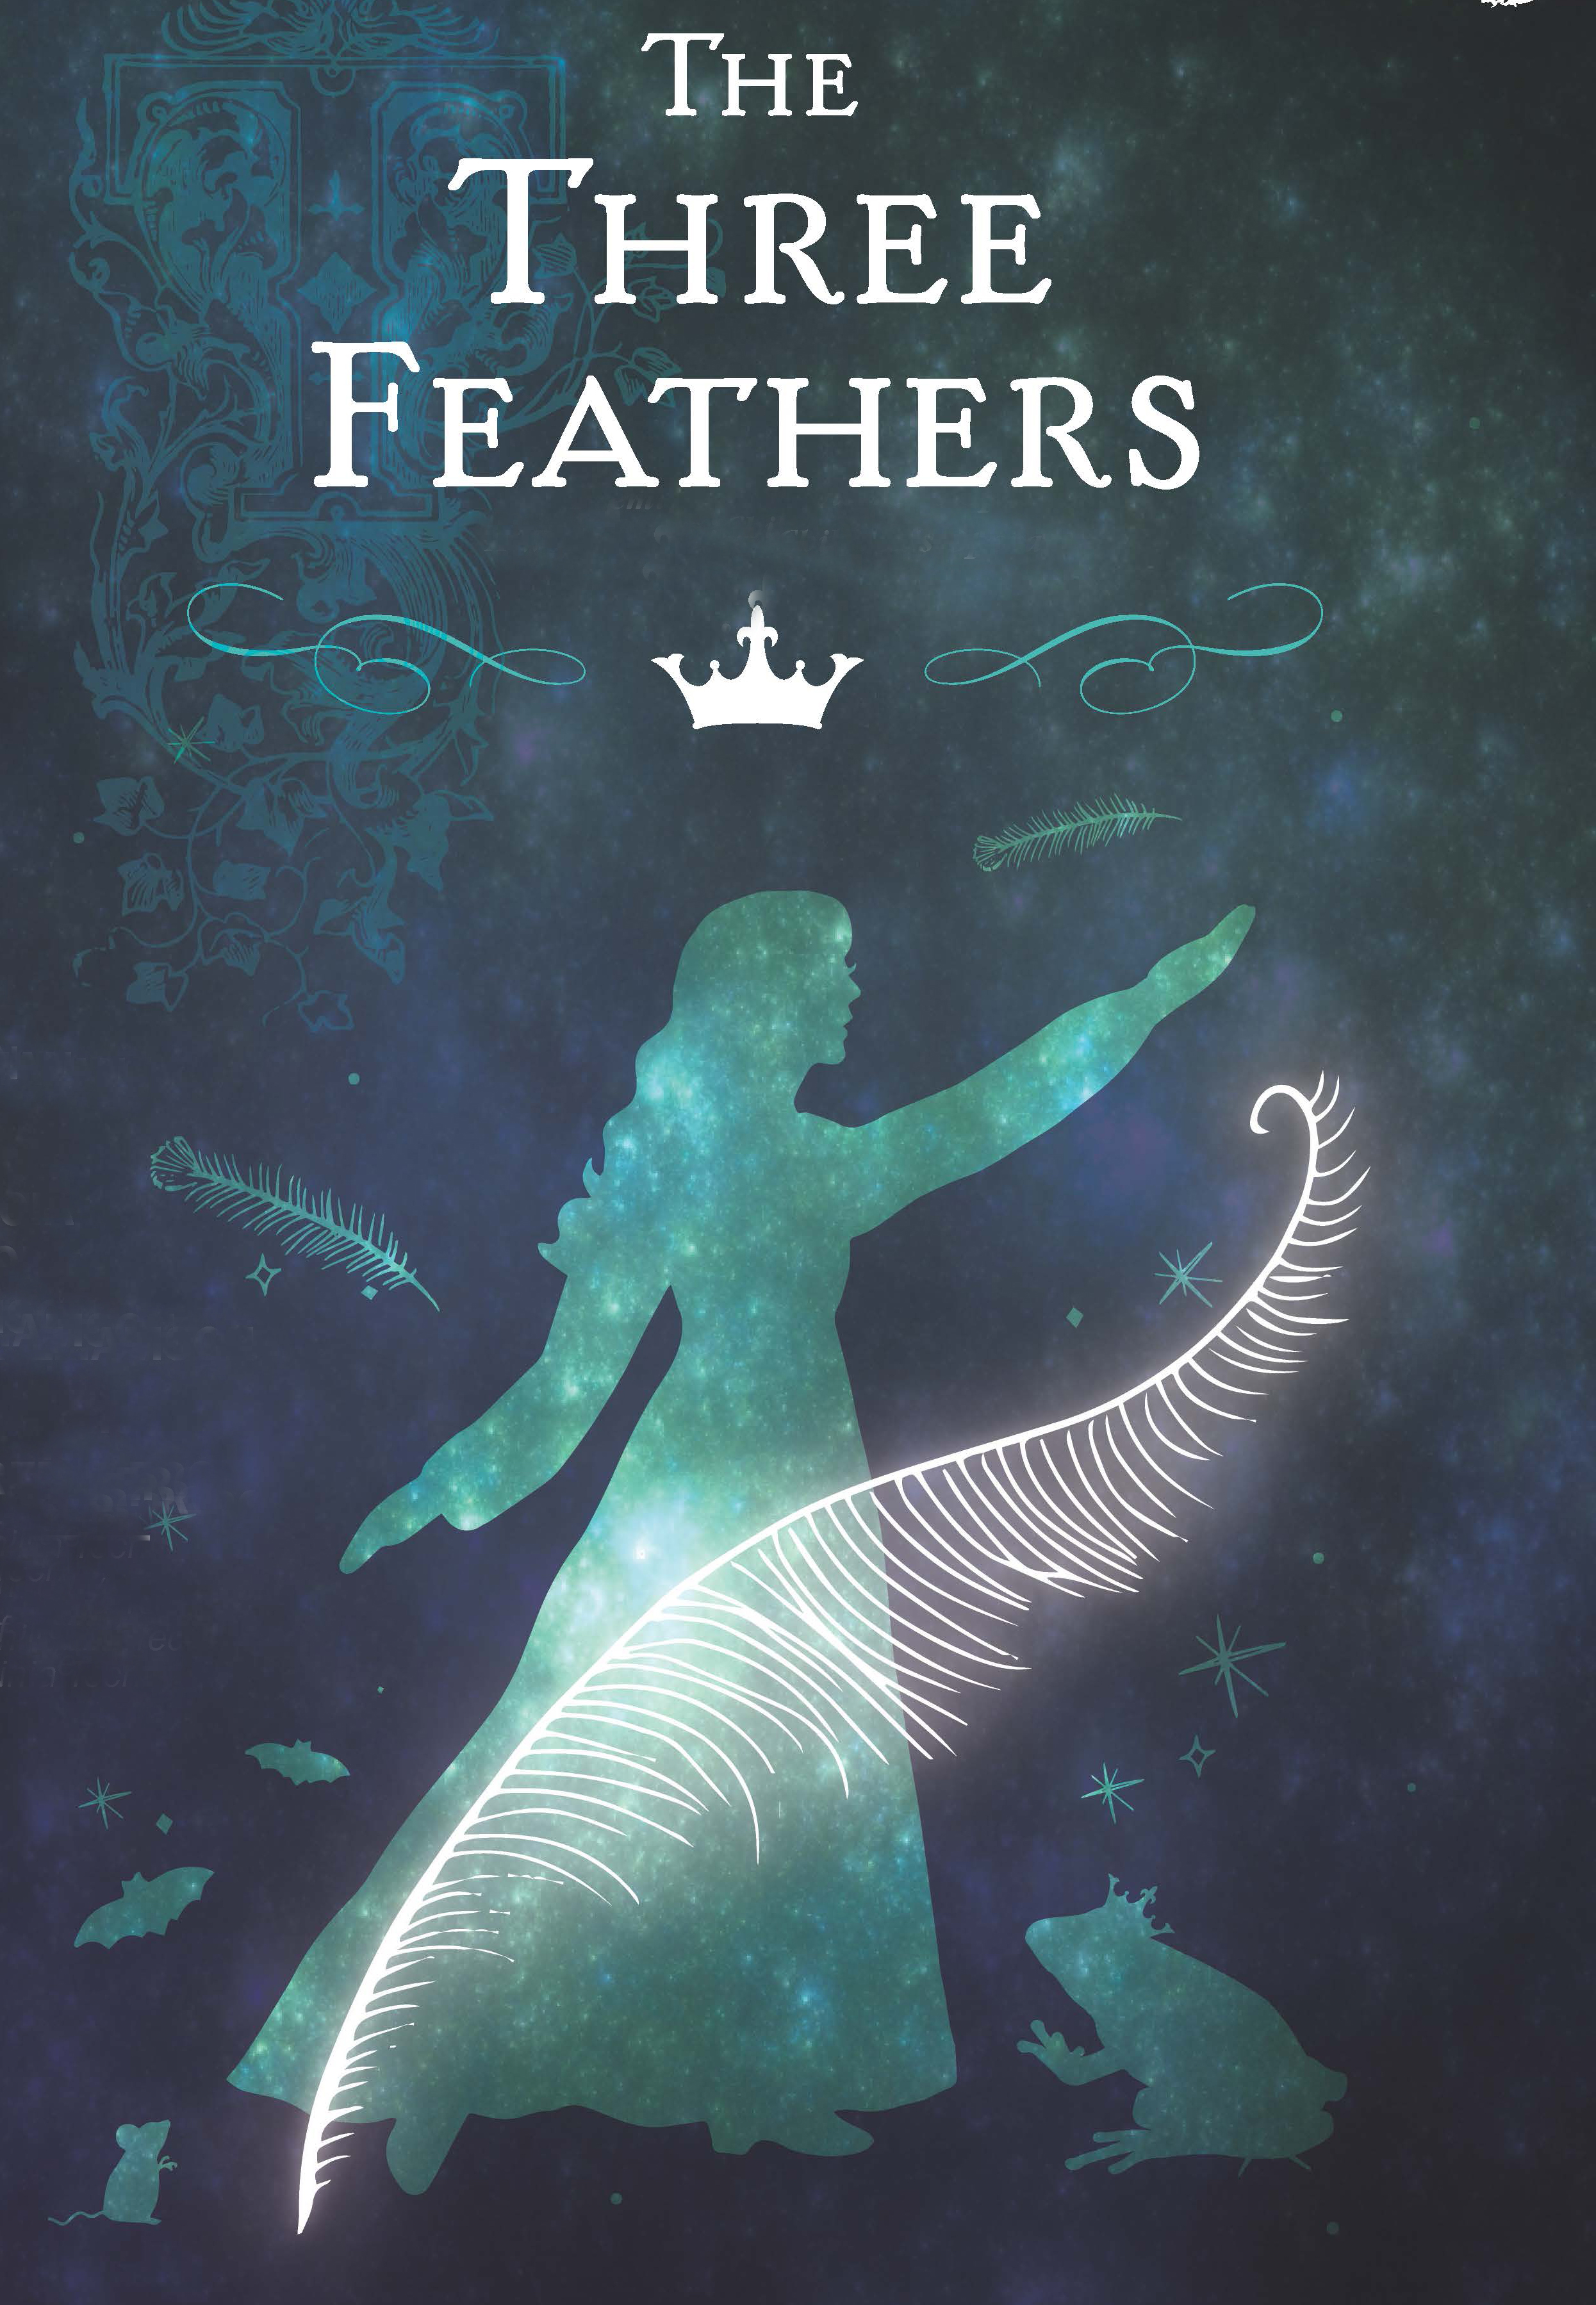 The Three Feathers children's opera